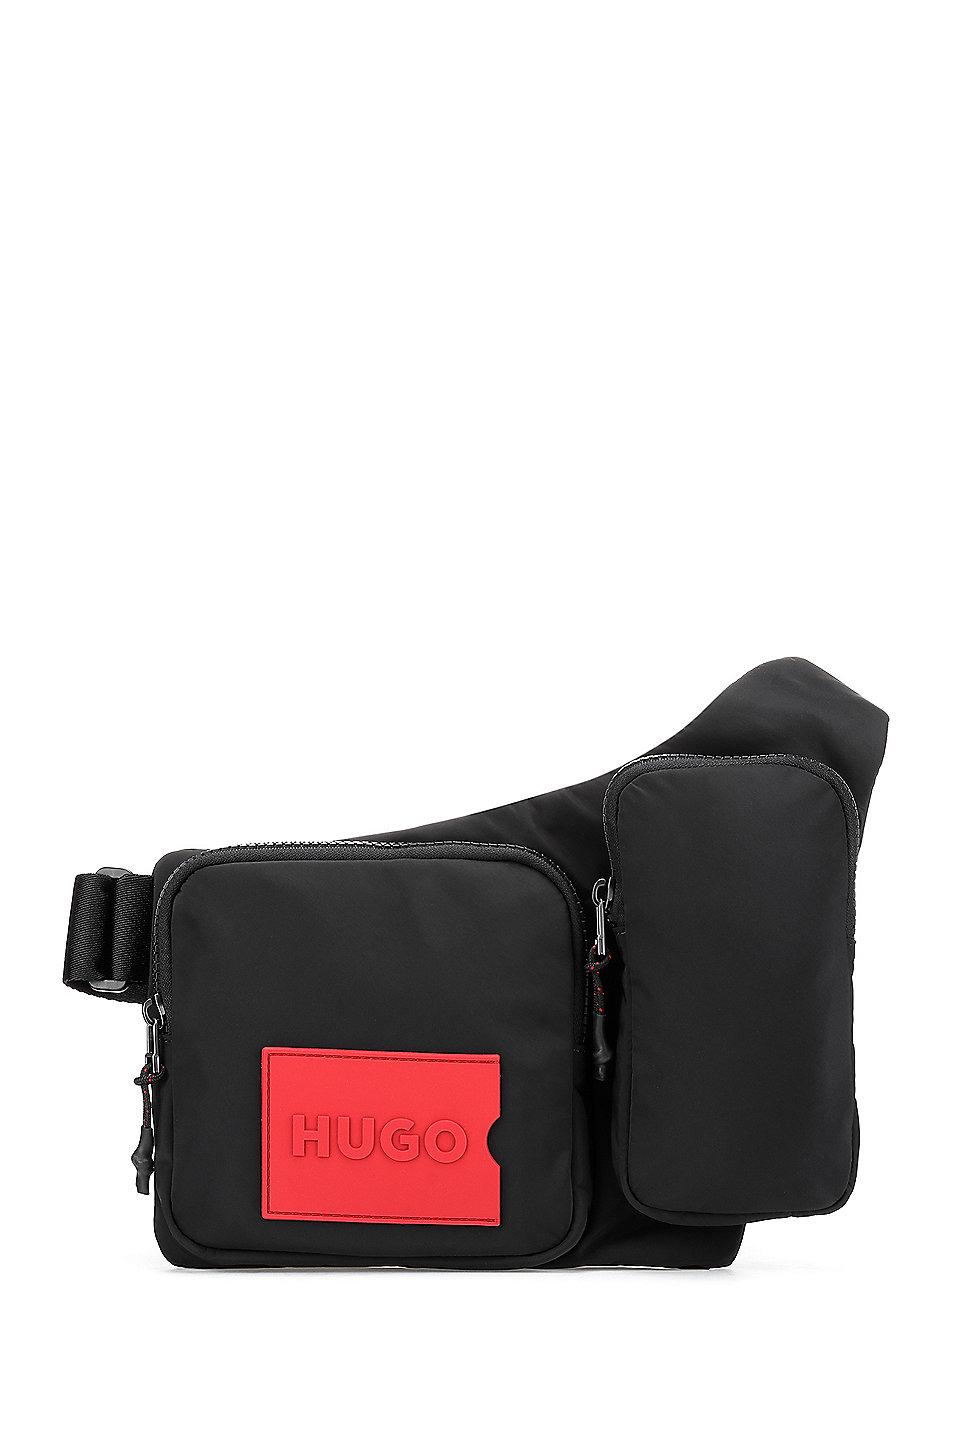 fluctueren mozaïek Onheil HUGO - Recycled-nylon envelope bag with red logo patch